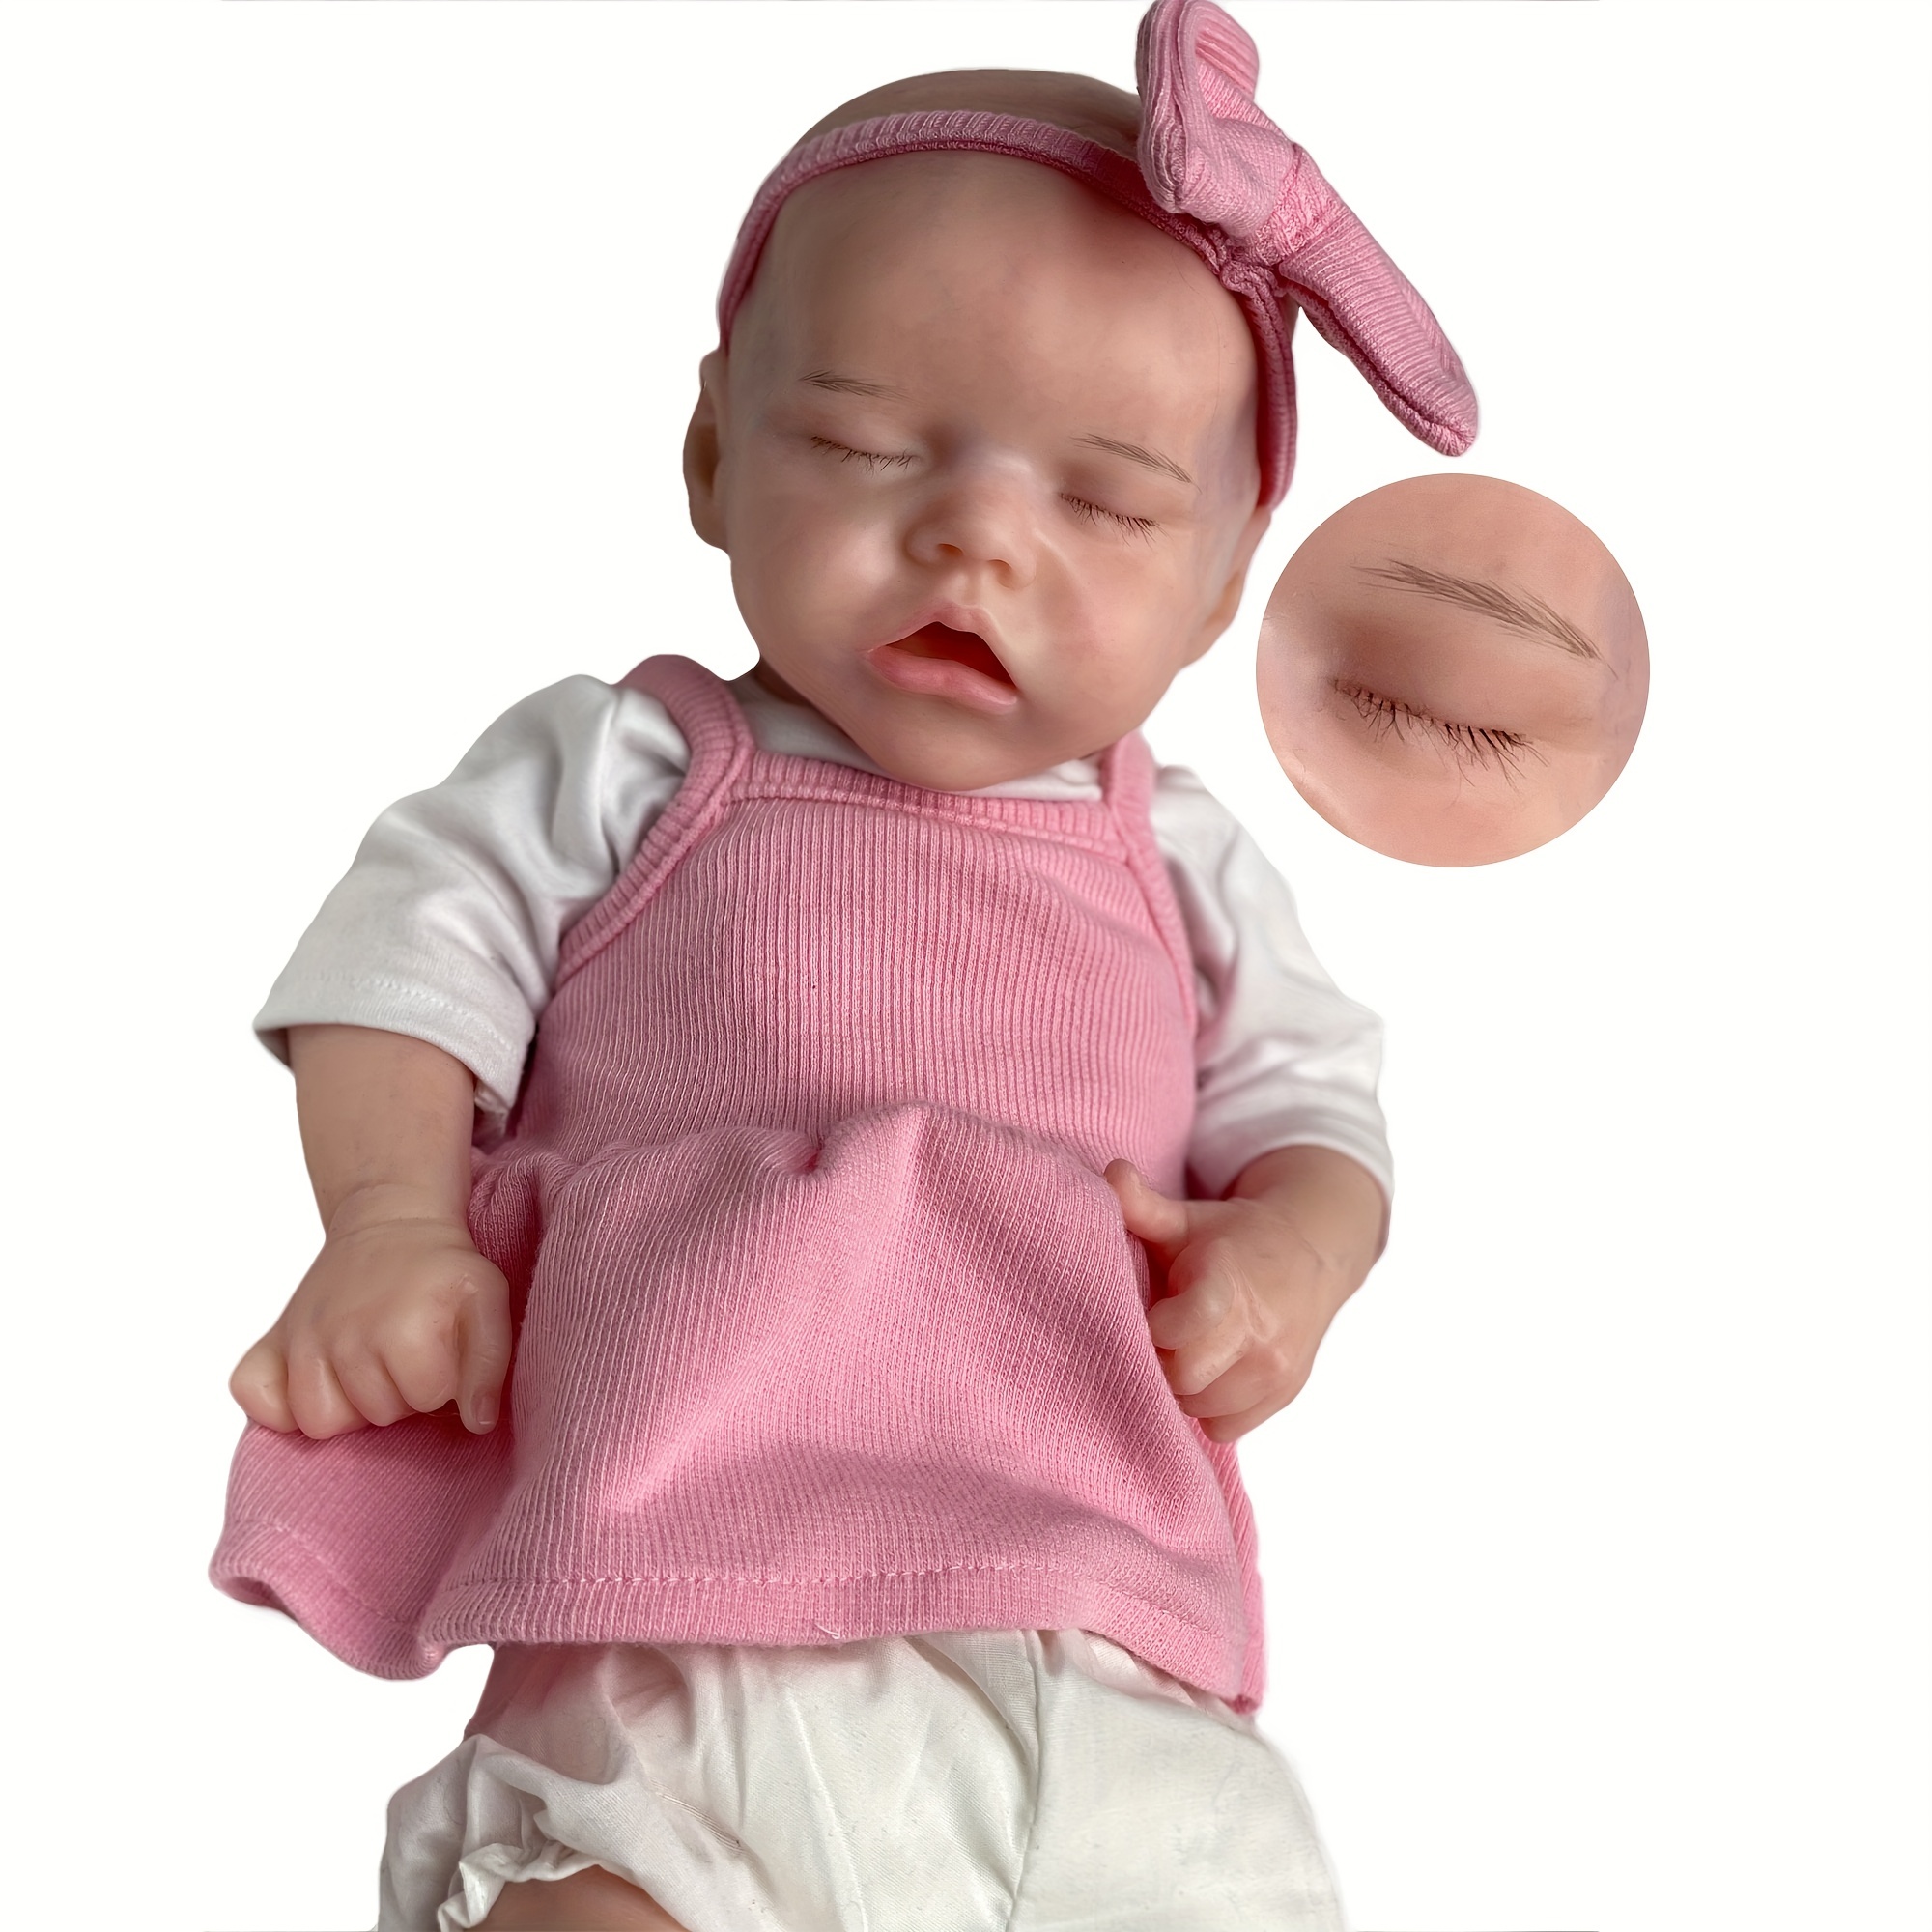 Bebe Reborn 18 Full Solid Silicone Reborn Doll Twins A&B Handmade Painted  Sleeping Baby Doll Boneca